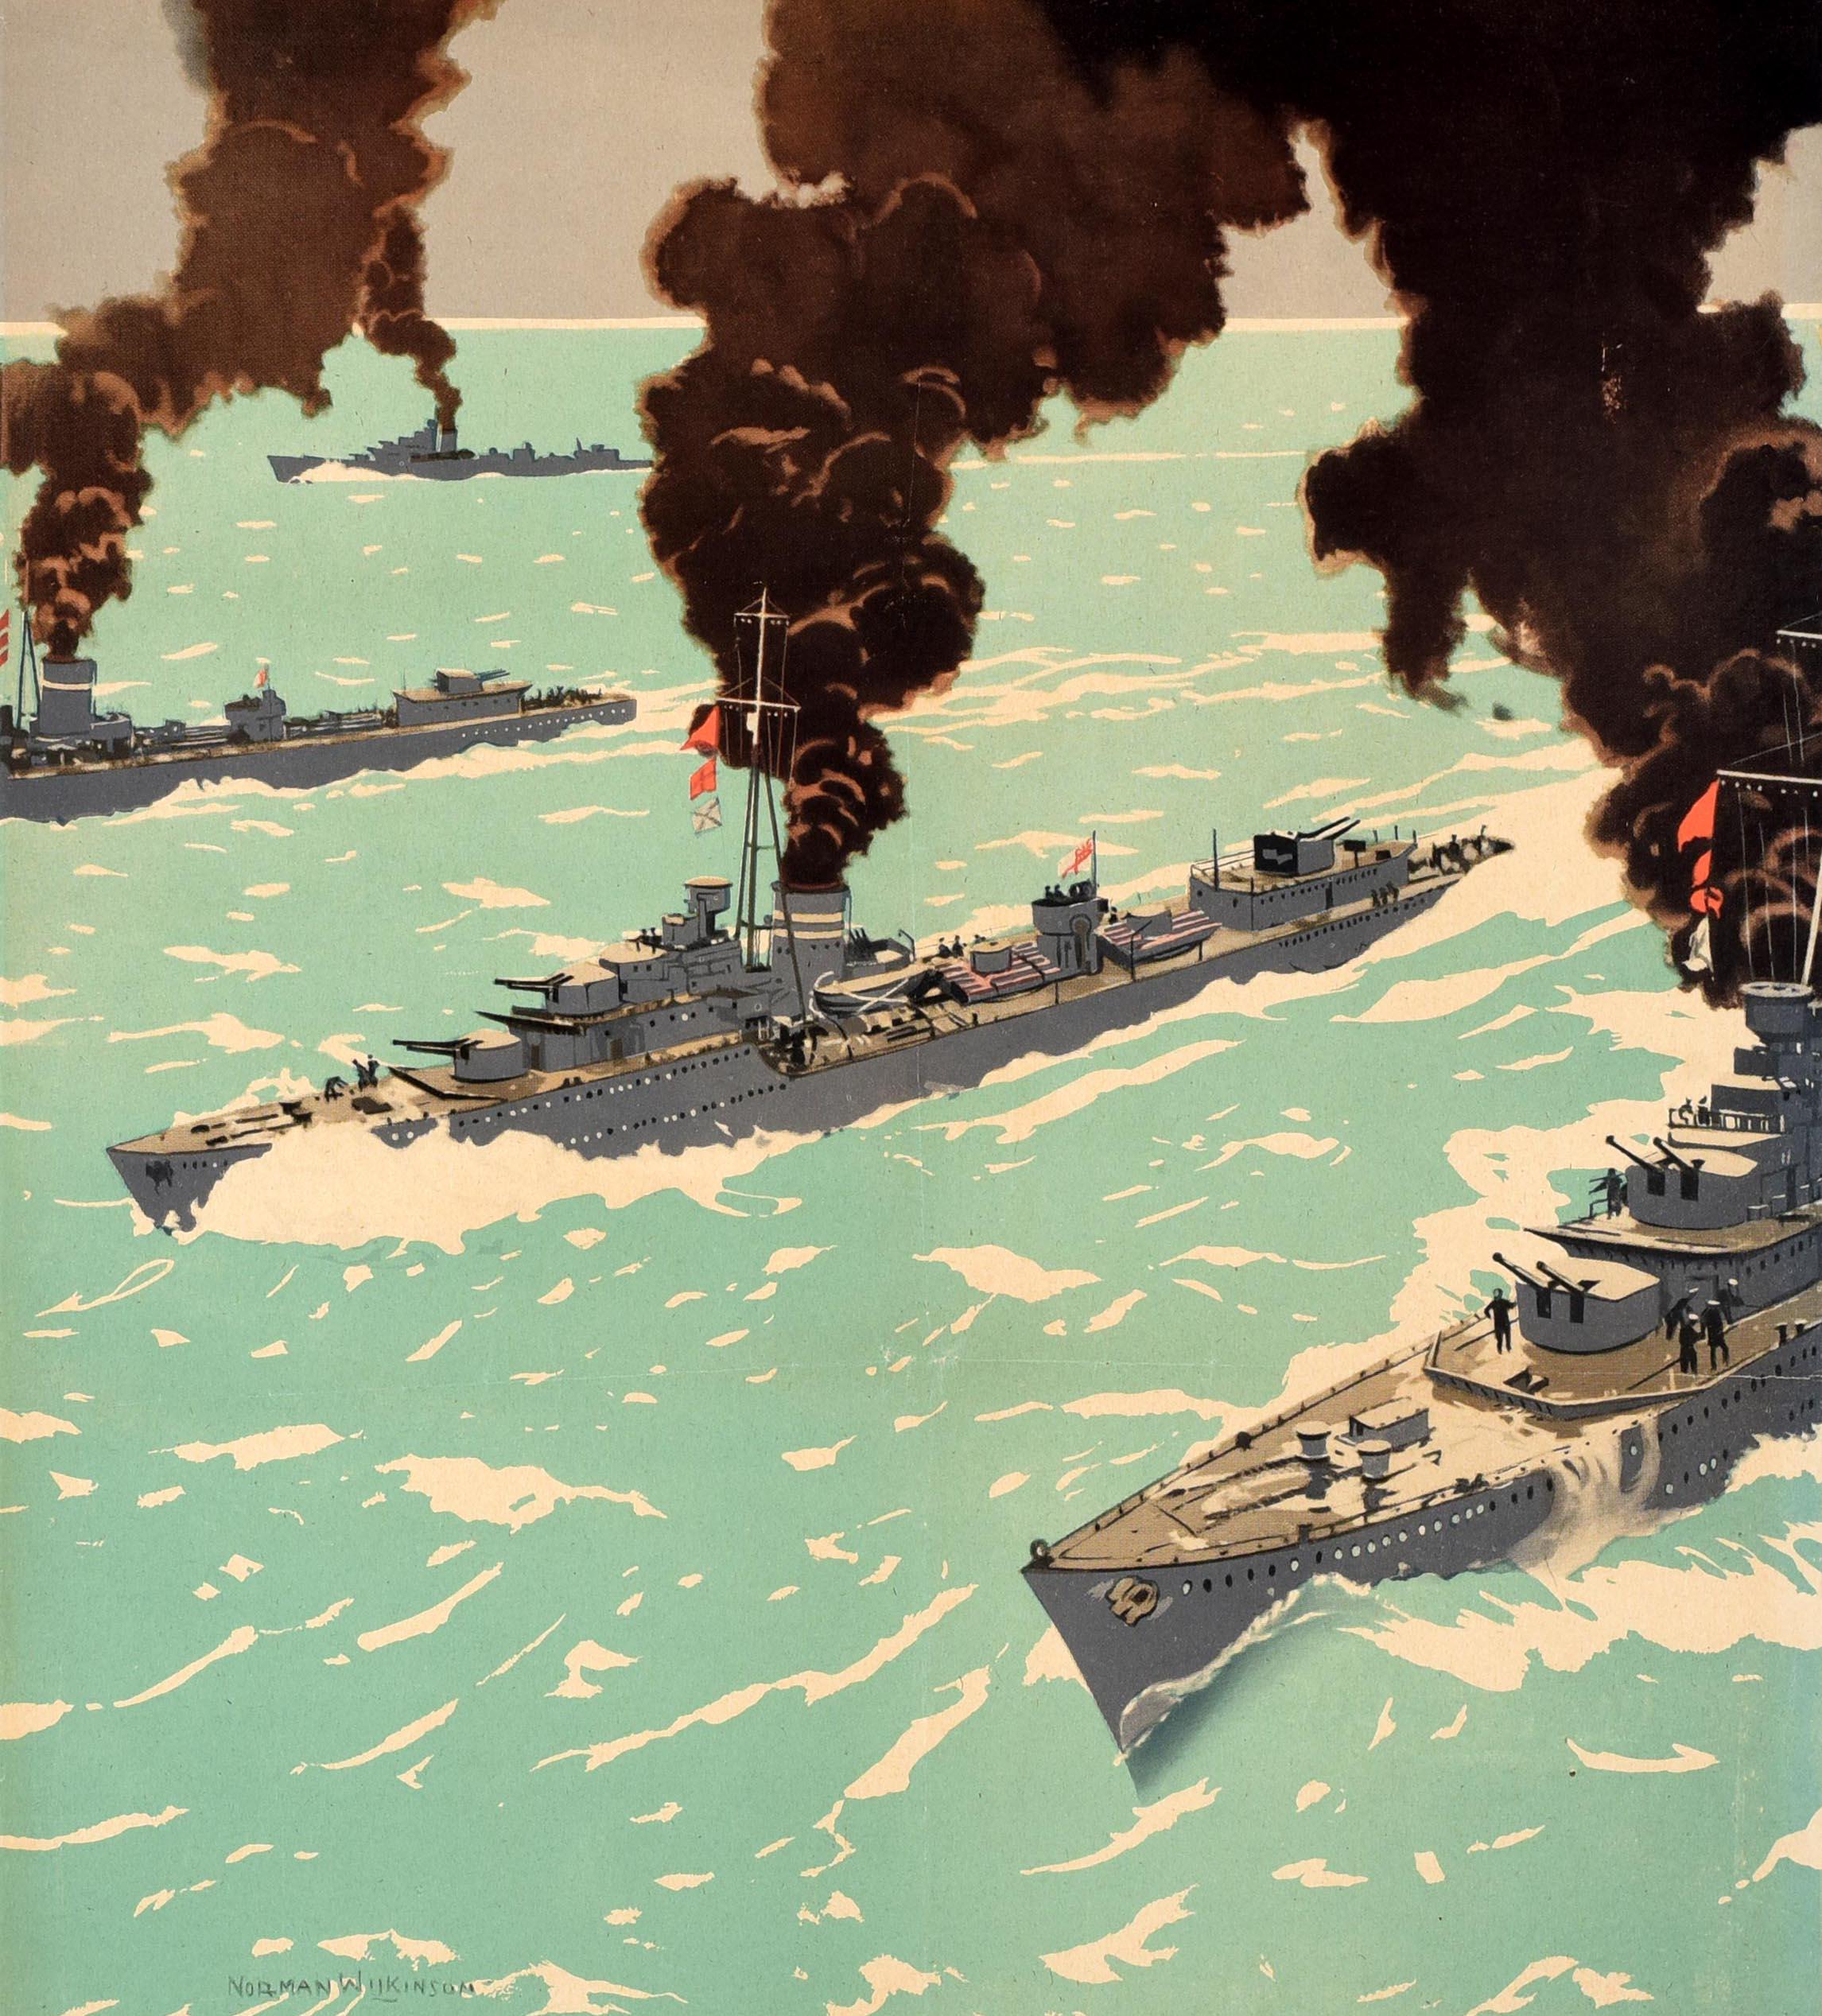 Original Vintage WWII Poster War Savings Are Warships Norman Wilkinson Navy Art - Print by Norman Wilkinson CBE PRI